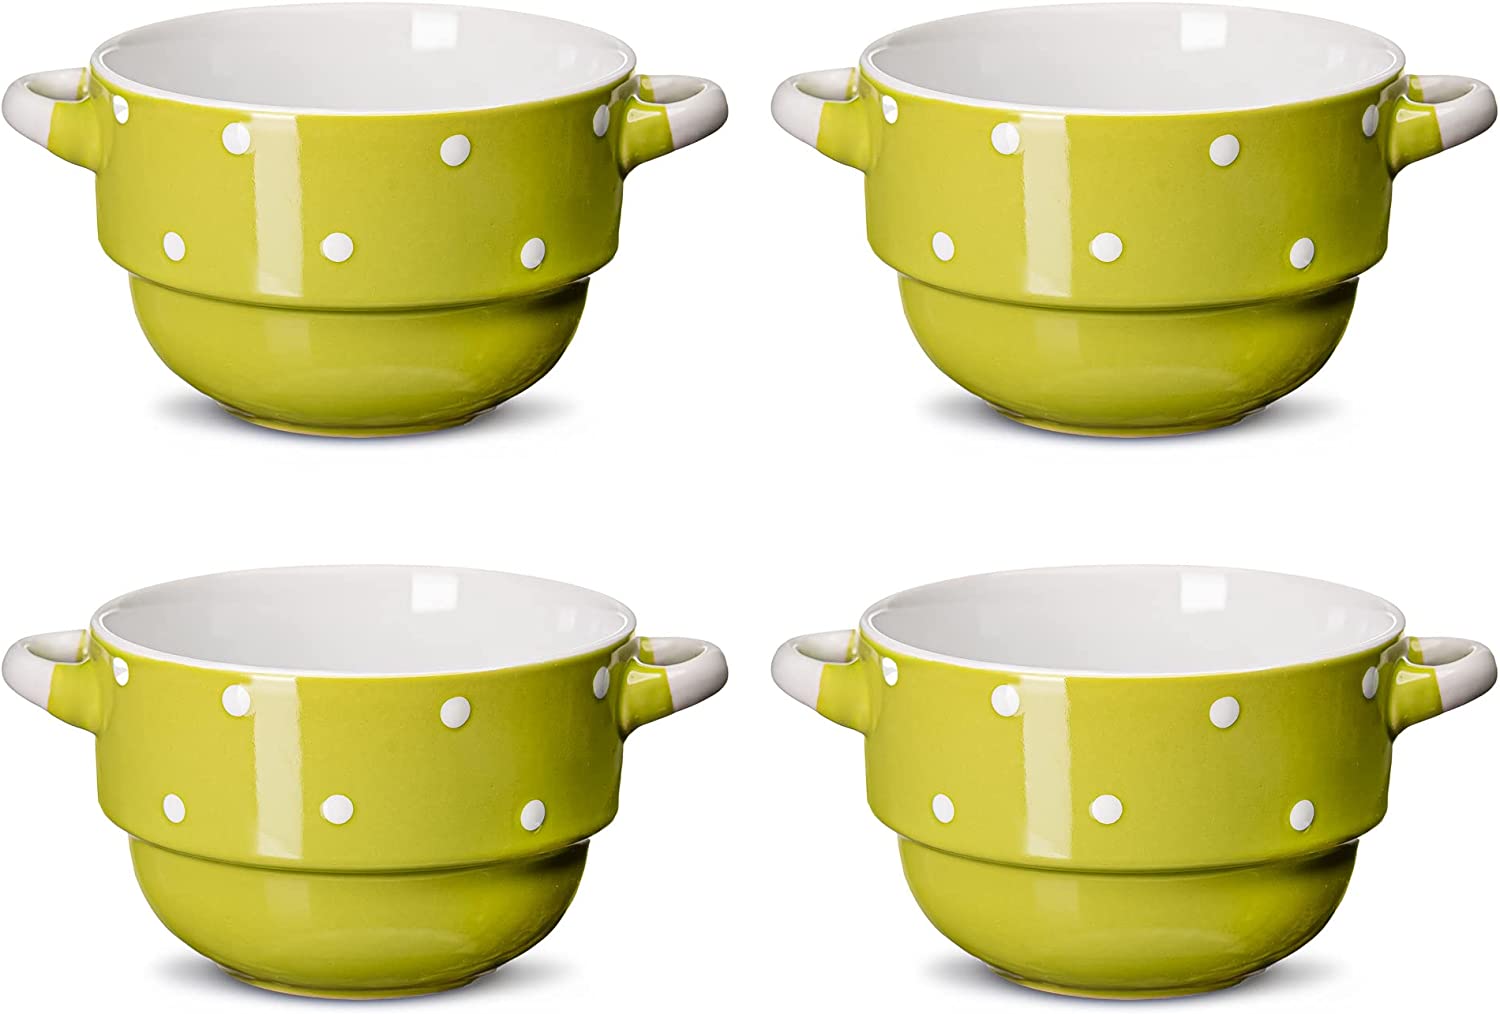 Pottery Coffee Mug 16 oz - Ceramic Tea Cup - Soup Mug with Handle - 1 Pcs  (Blue to Tan) - ecodesign-us